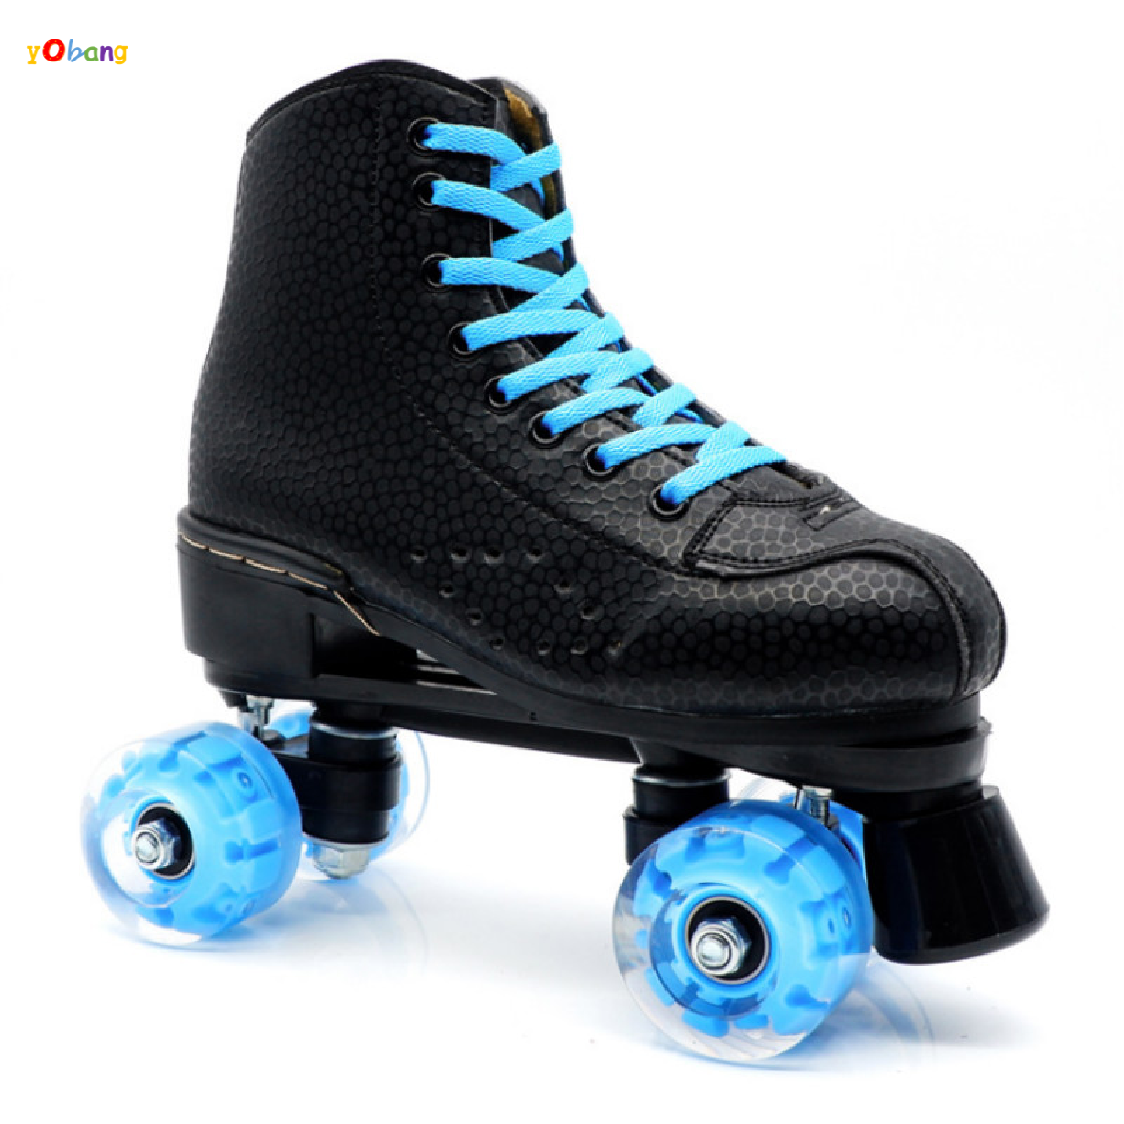 roller skate shoes 4 wheels